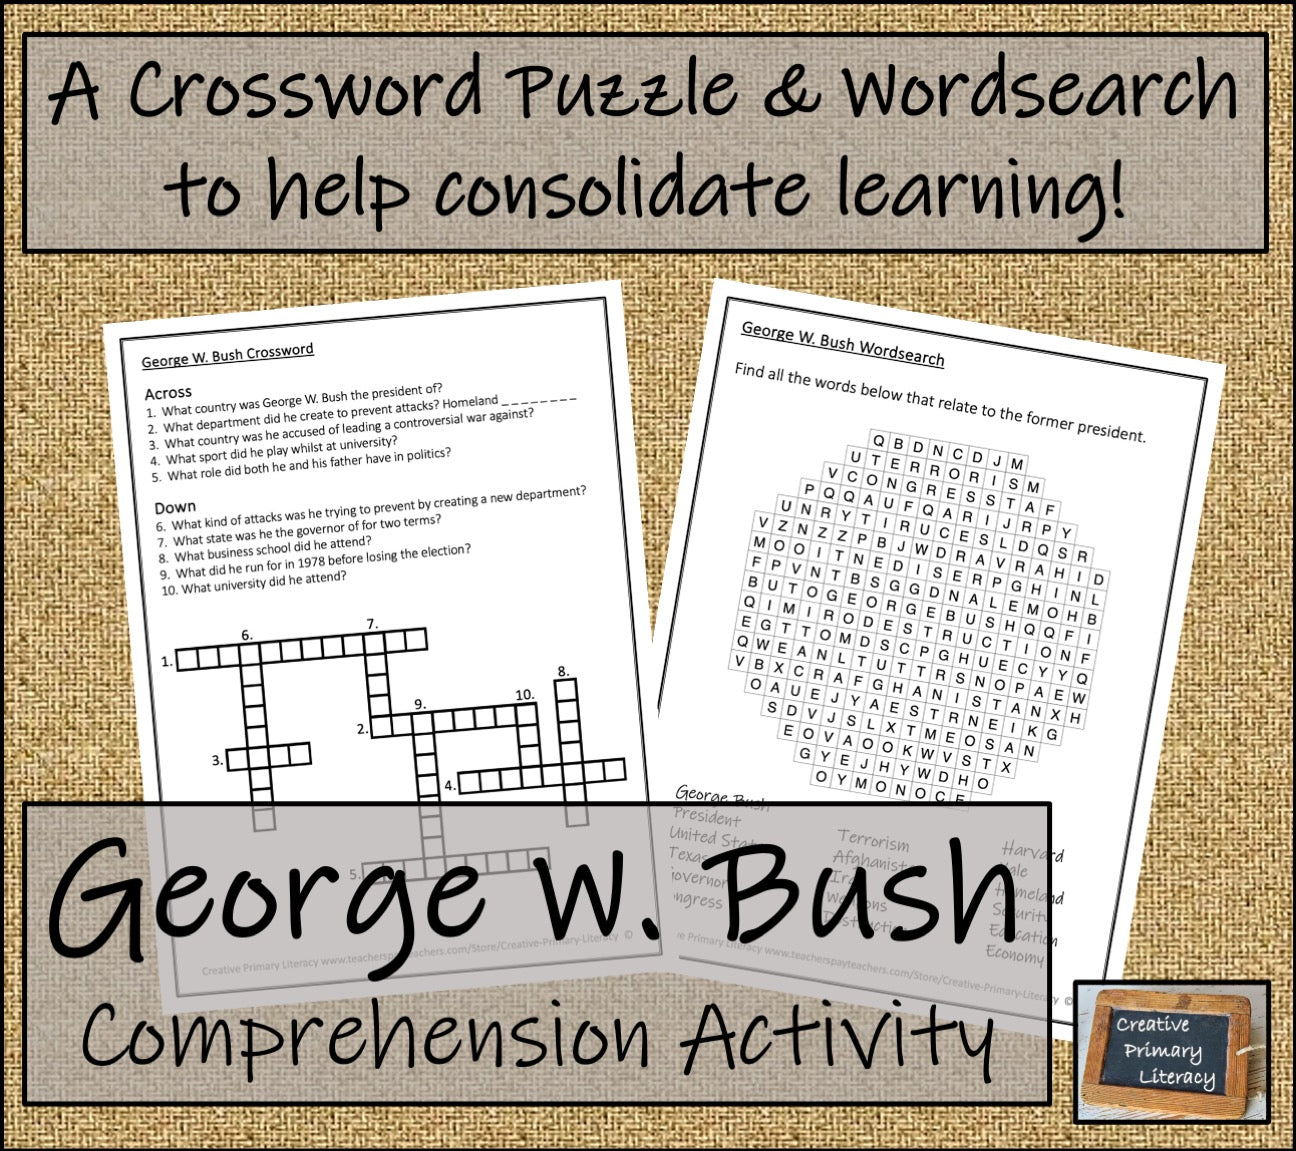 George W. Bush Close Reading Comprehension Activity | 3rd Grade & 4th Grade